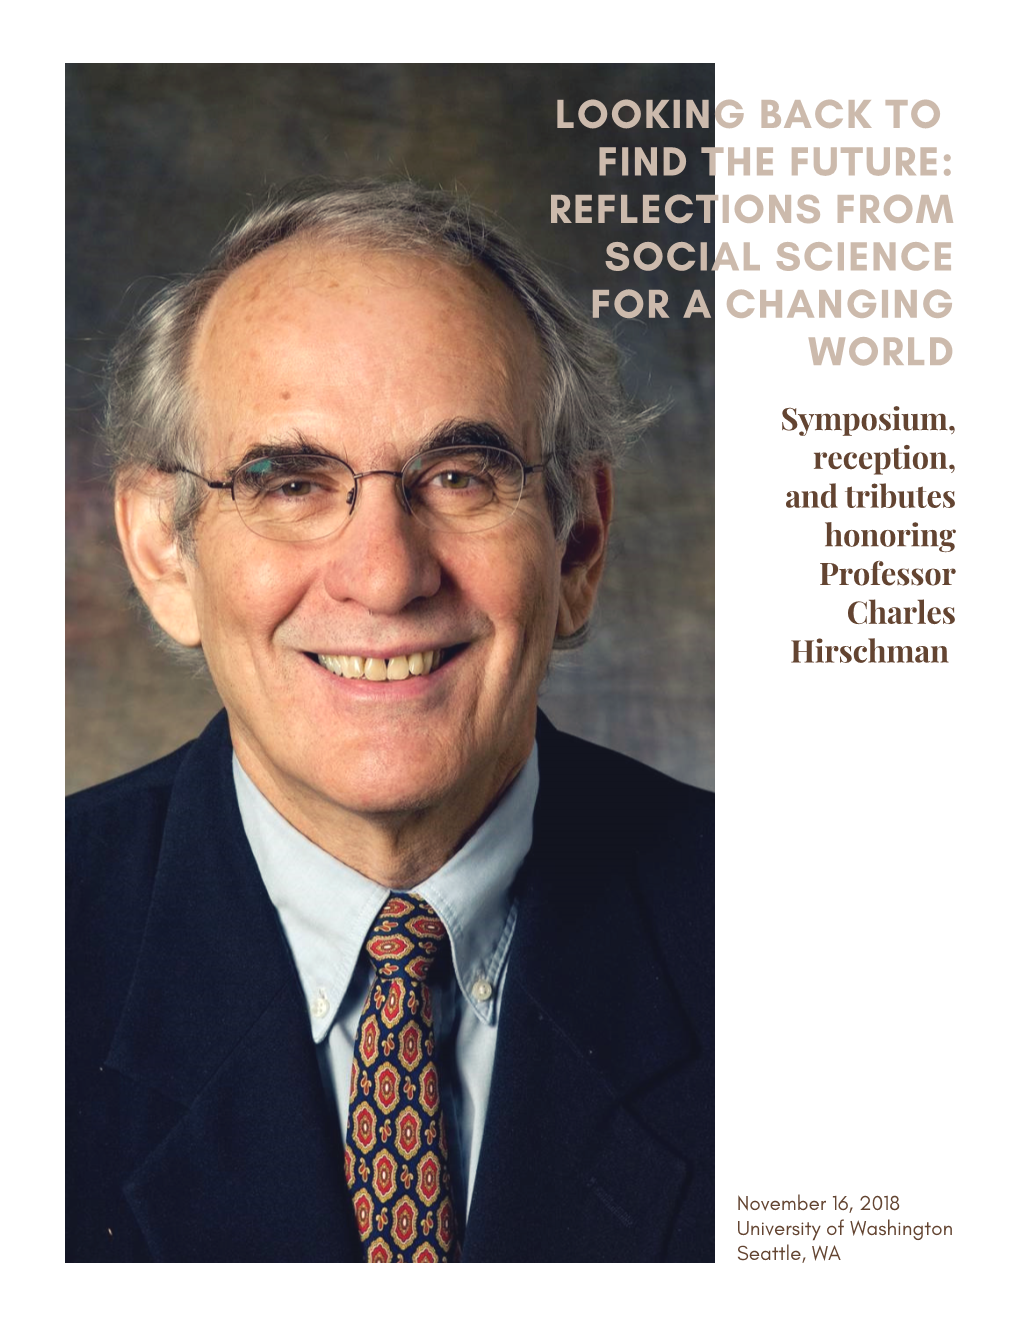 Symposium, Reception, and Tributes Honoring Professor Charles Hirschman